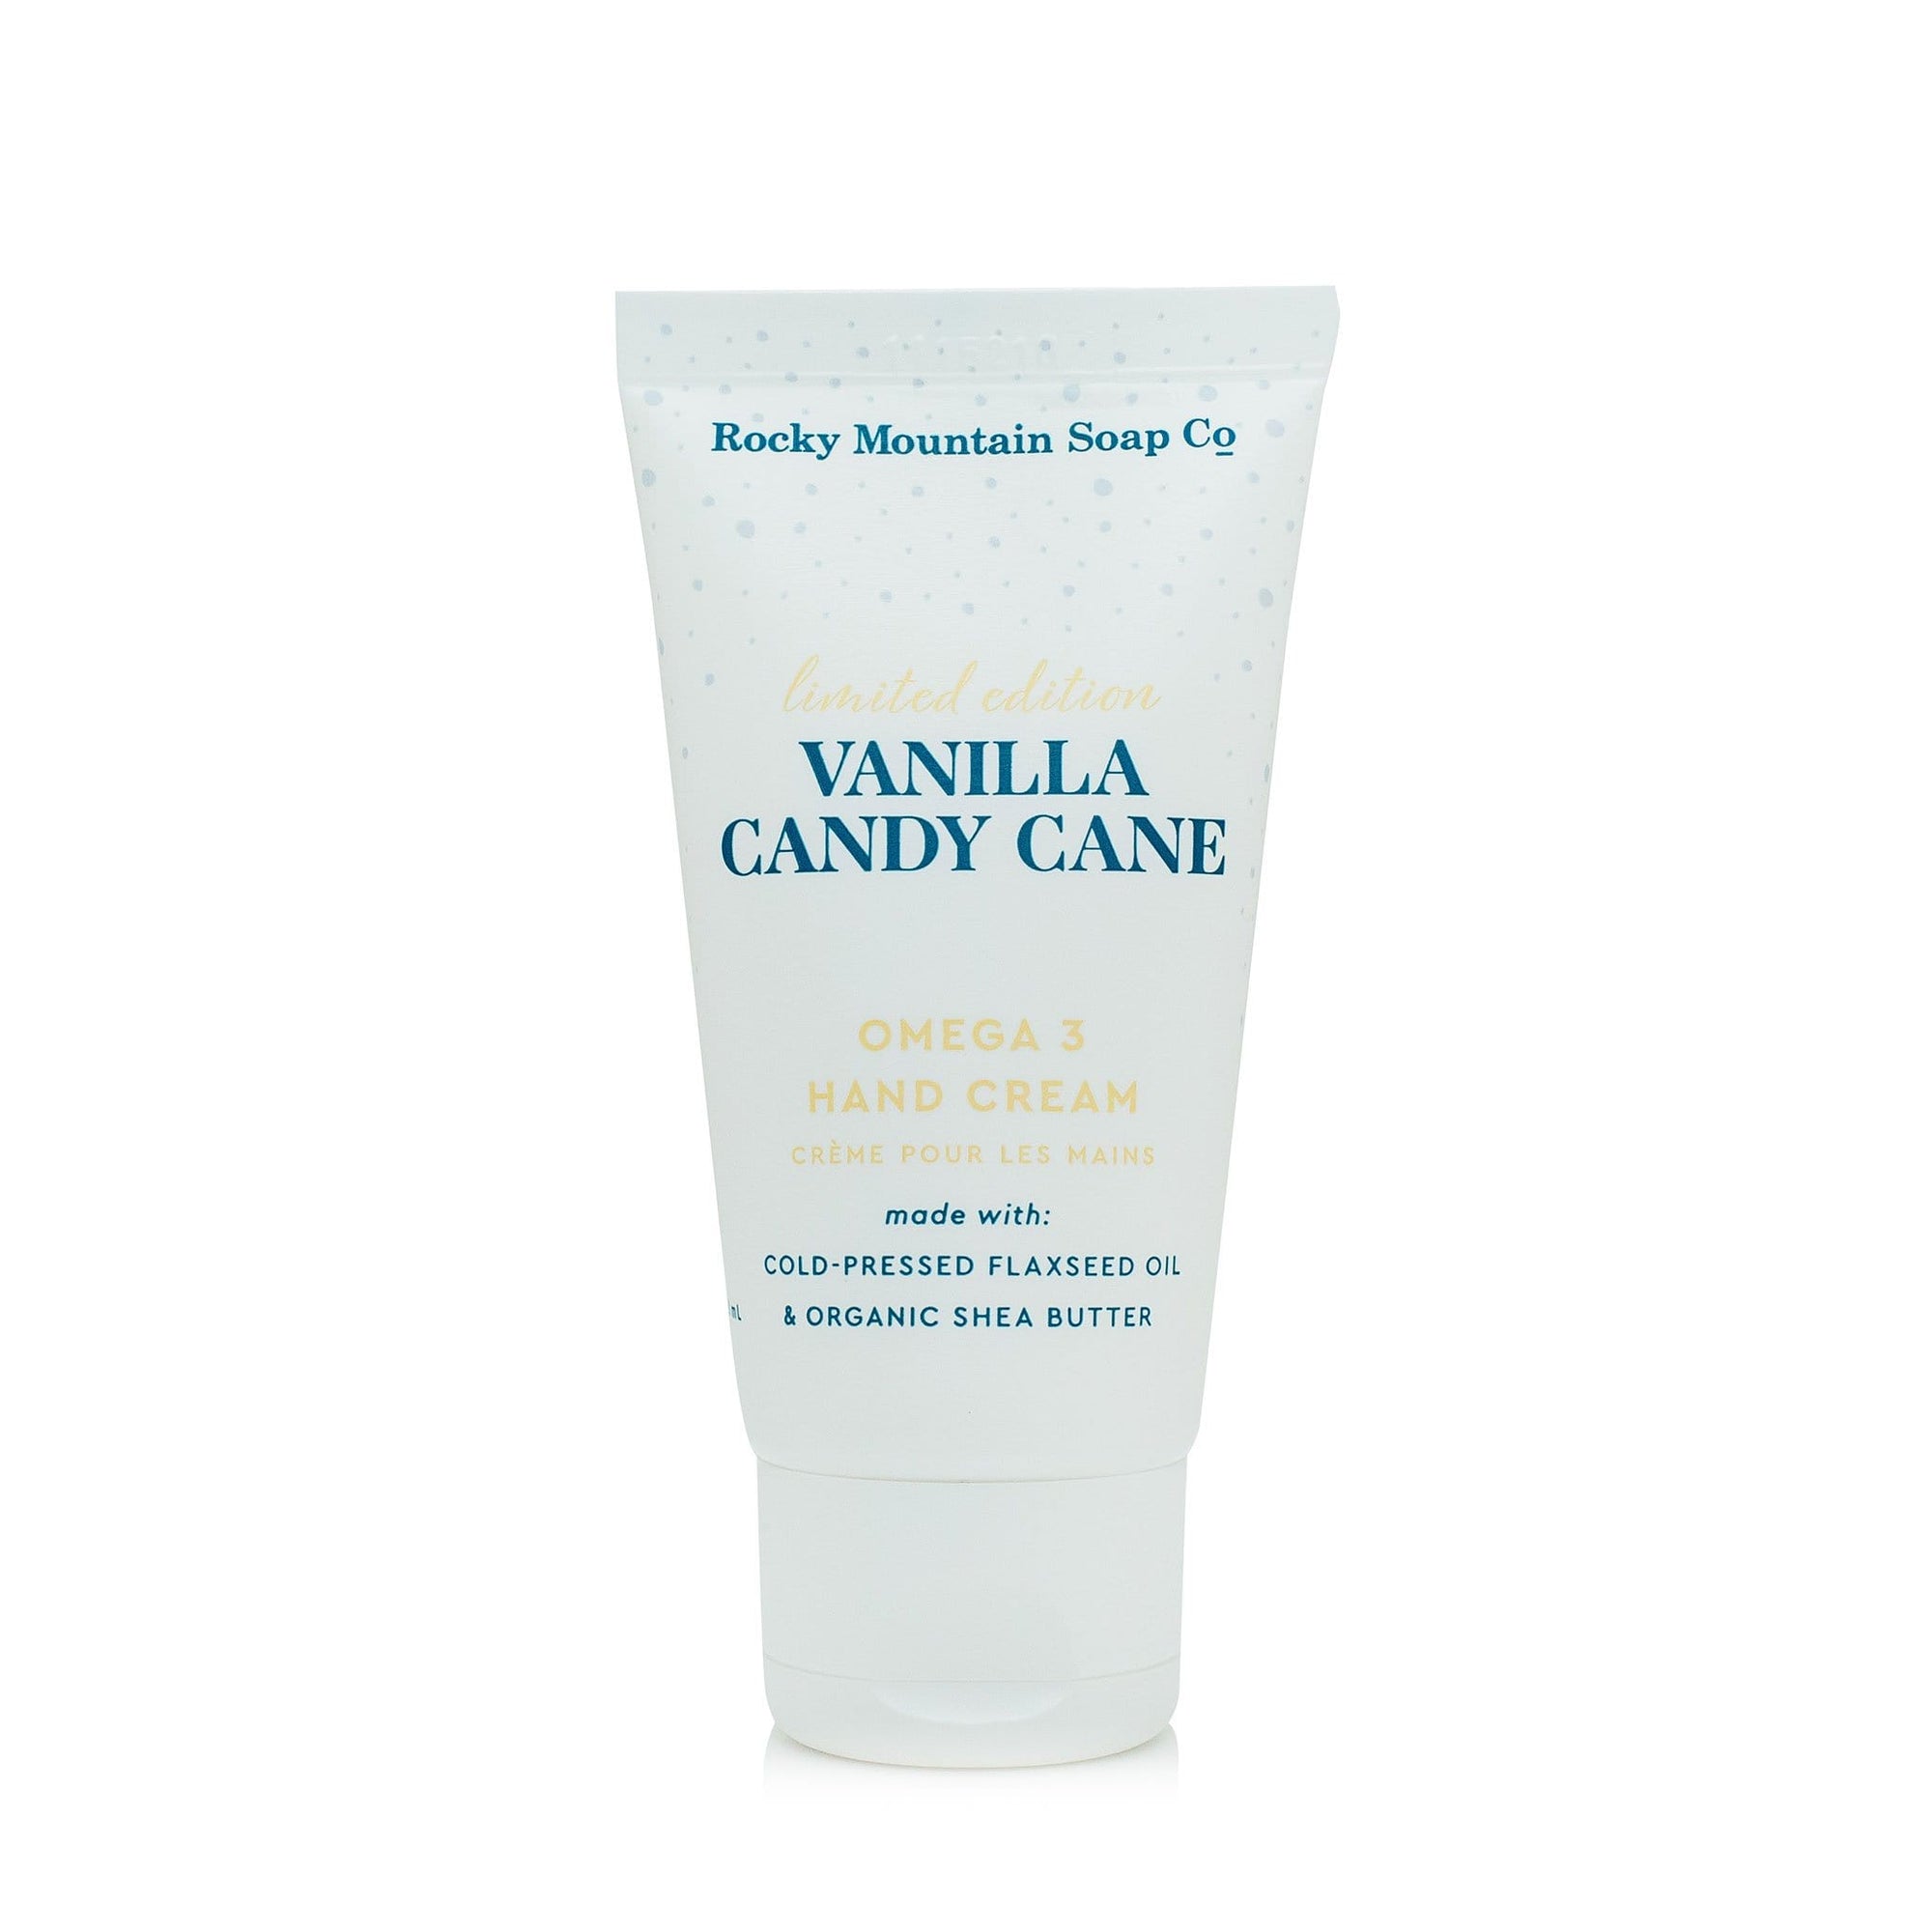 Vanilla Candy Cane Hand Cream